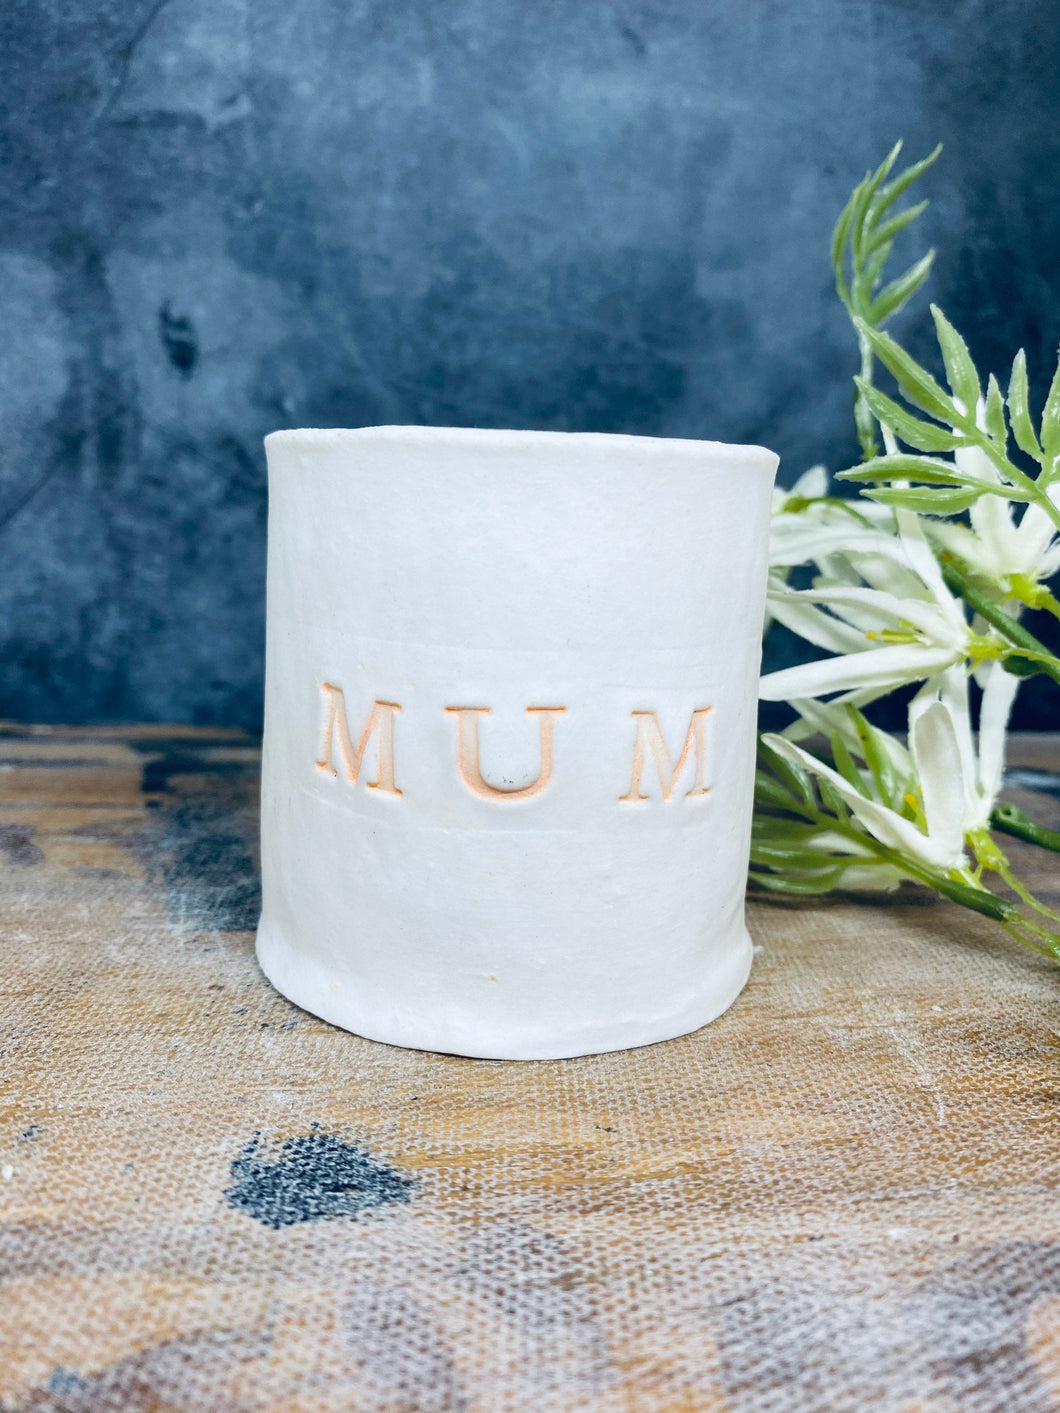 Handmade Porcelain Tea Light Candle Holder. For Mum. Remembrance/ Celebration Gift